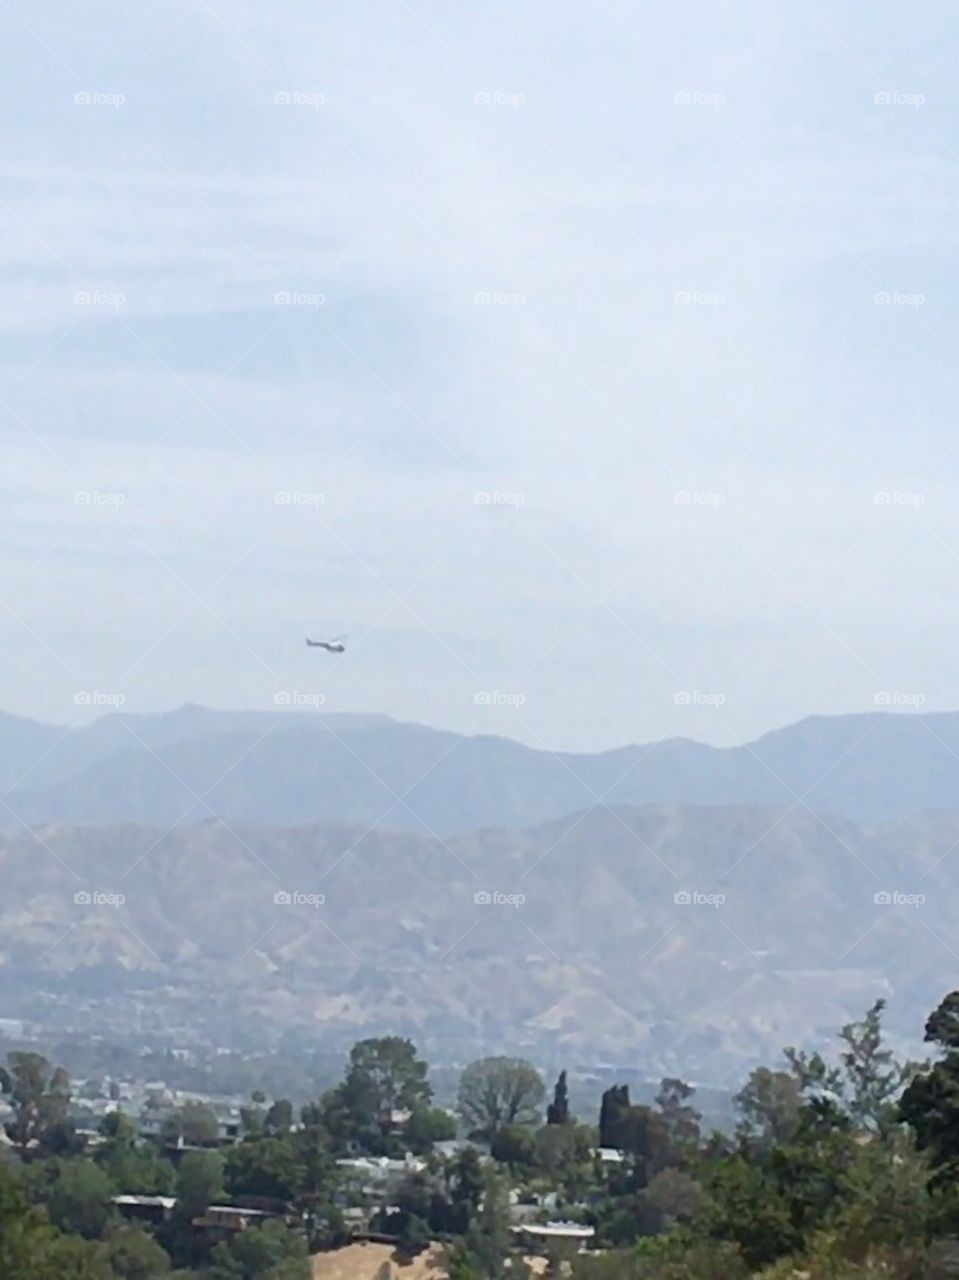 Hazy landscape in Los Angeles